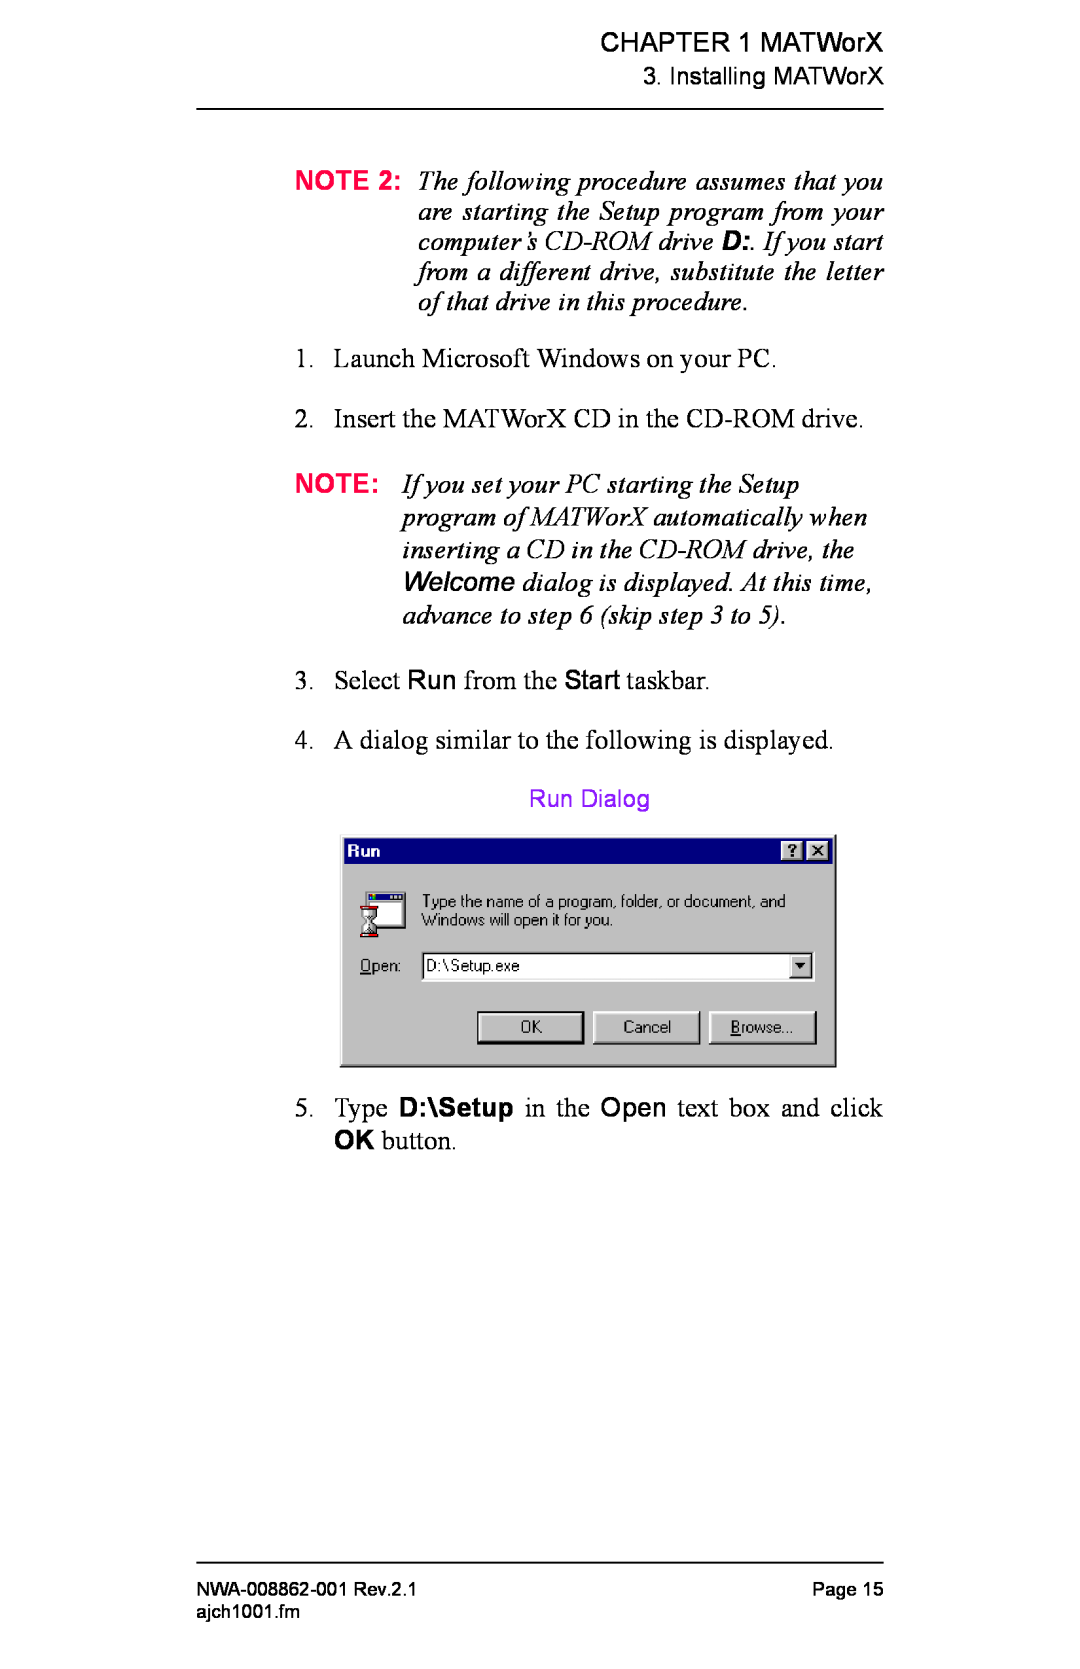 NEC NWA-008862-001 manual Launch Microsoft Windows on your PC 